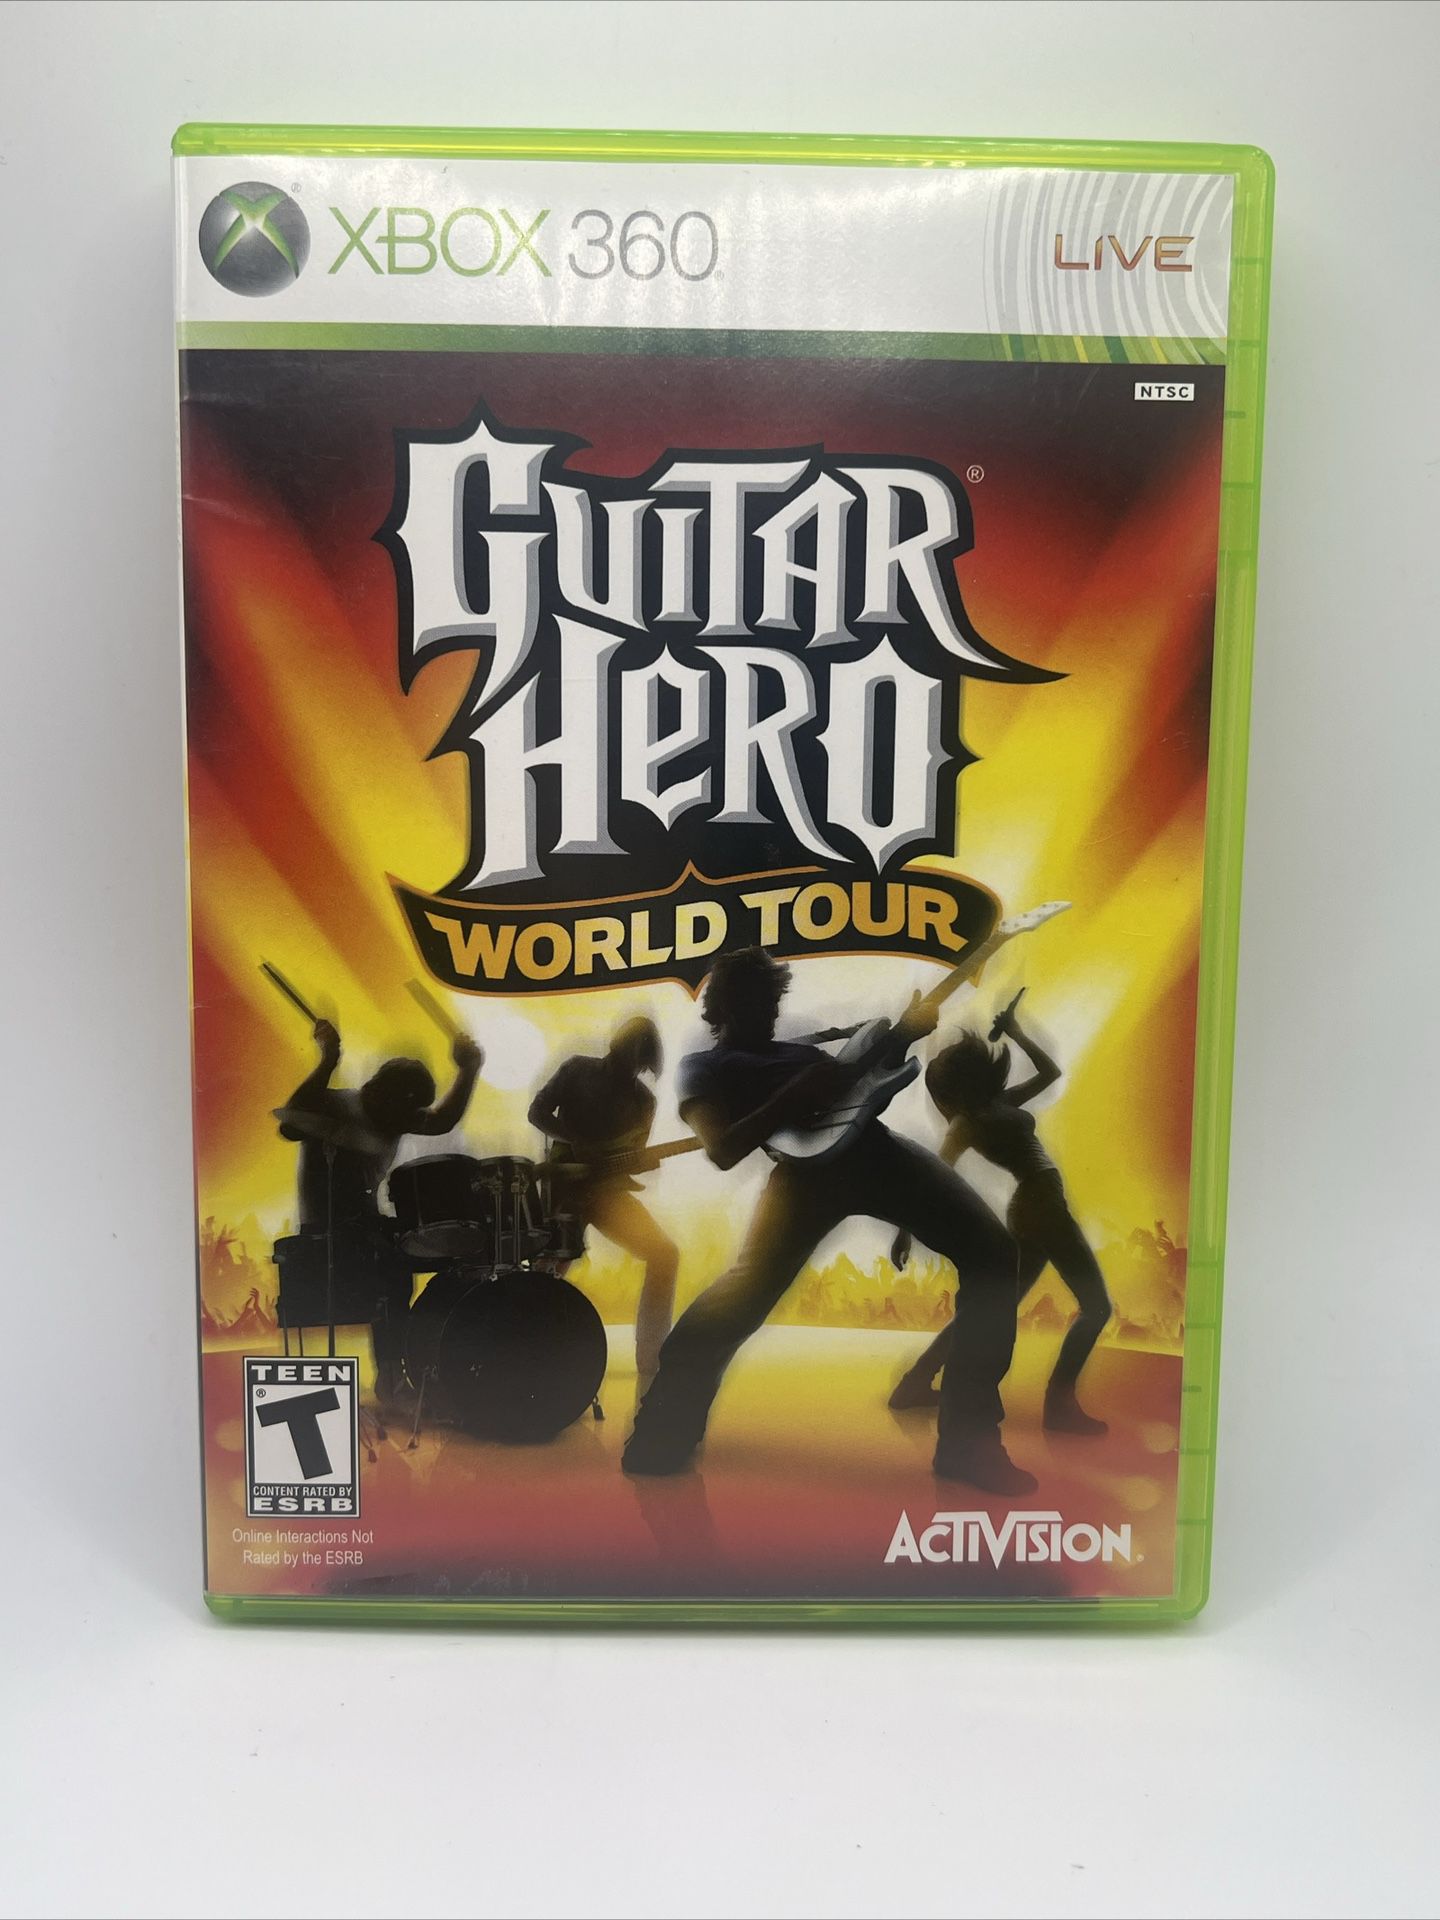 Guitar Hero 3 World Tour CIB With Manual